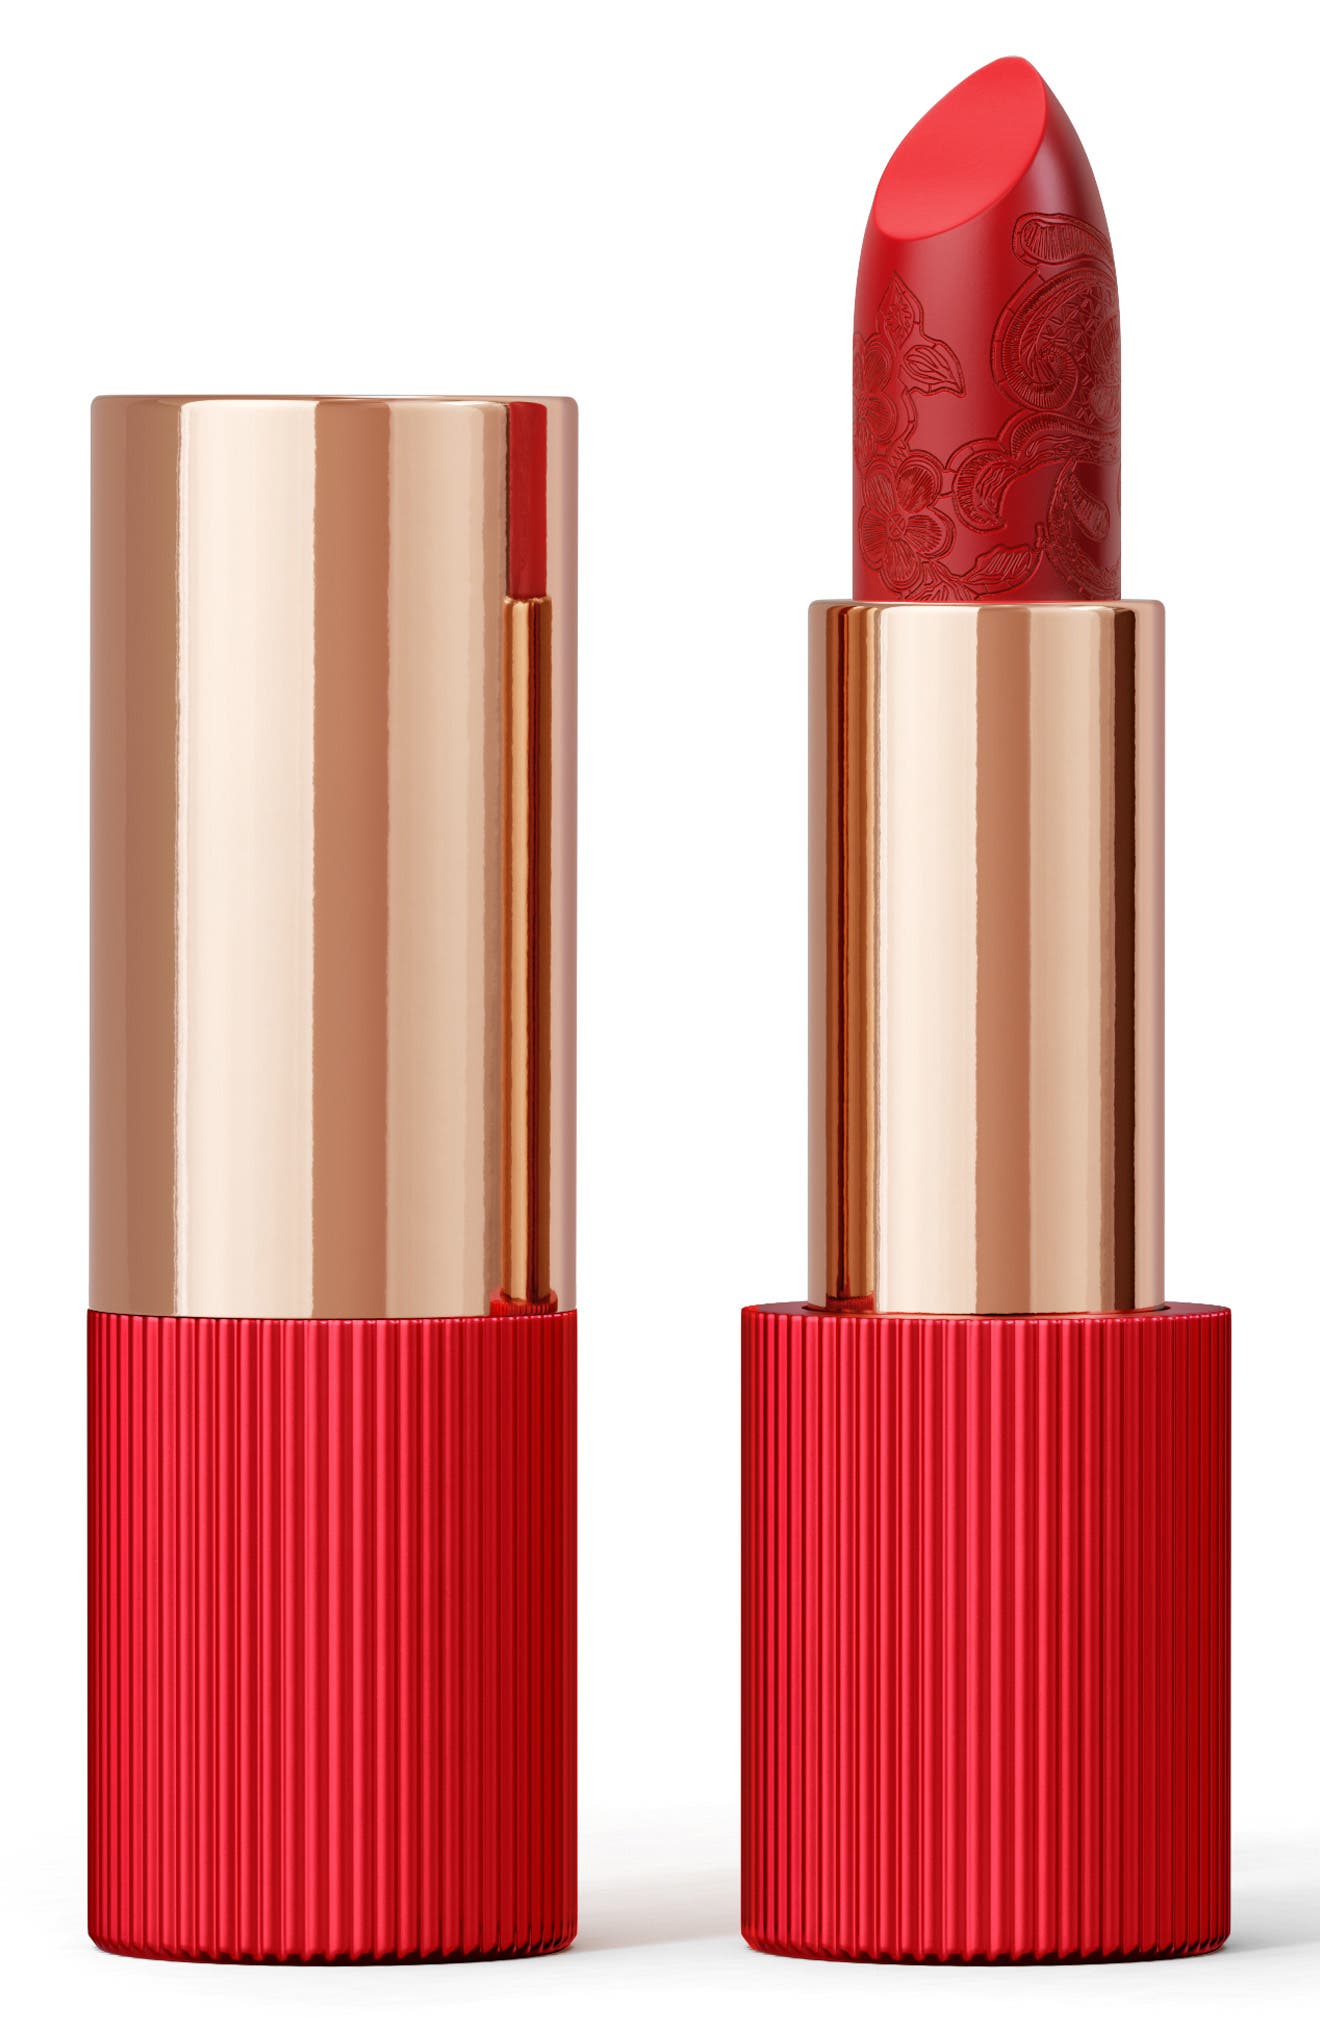 La Perla Refillable Matte Silk Lipstick in Poppy Red at Nordstrom